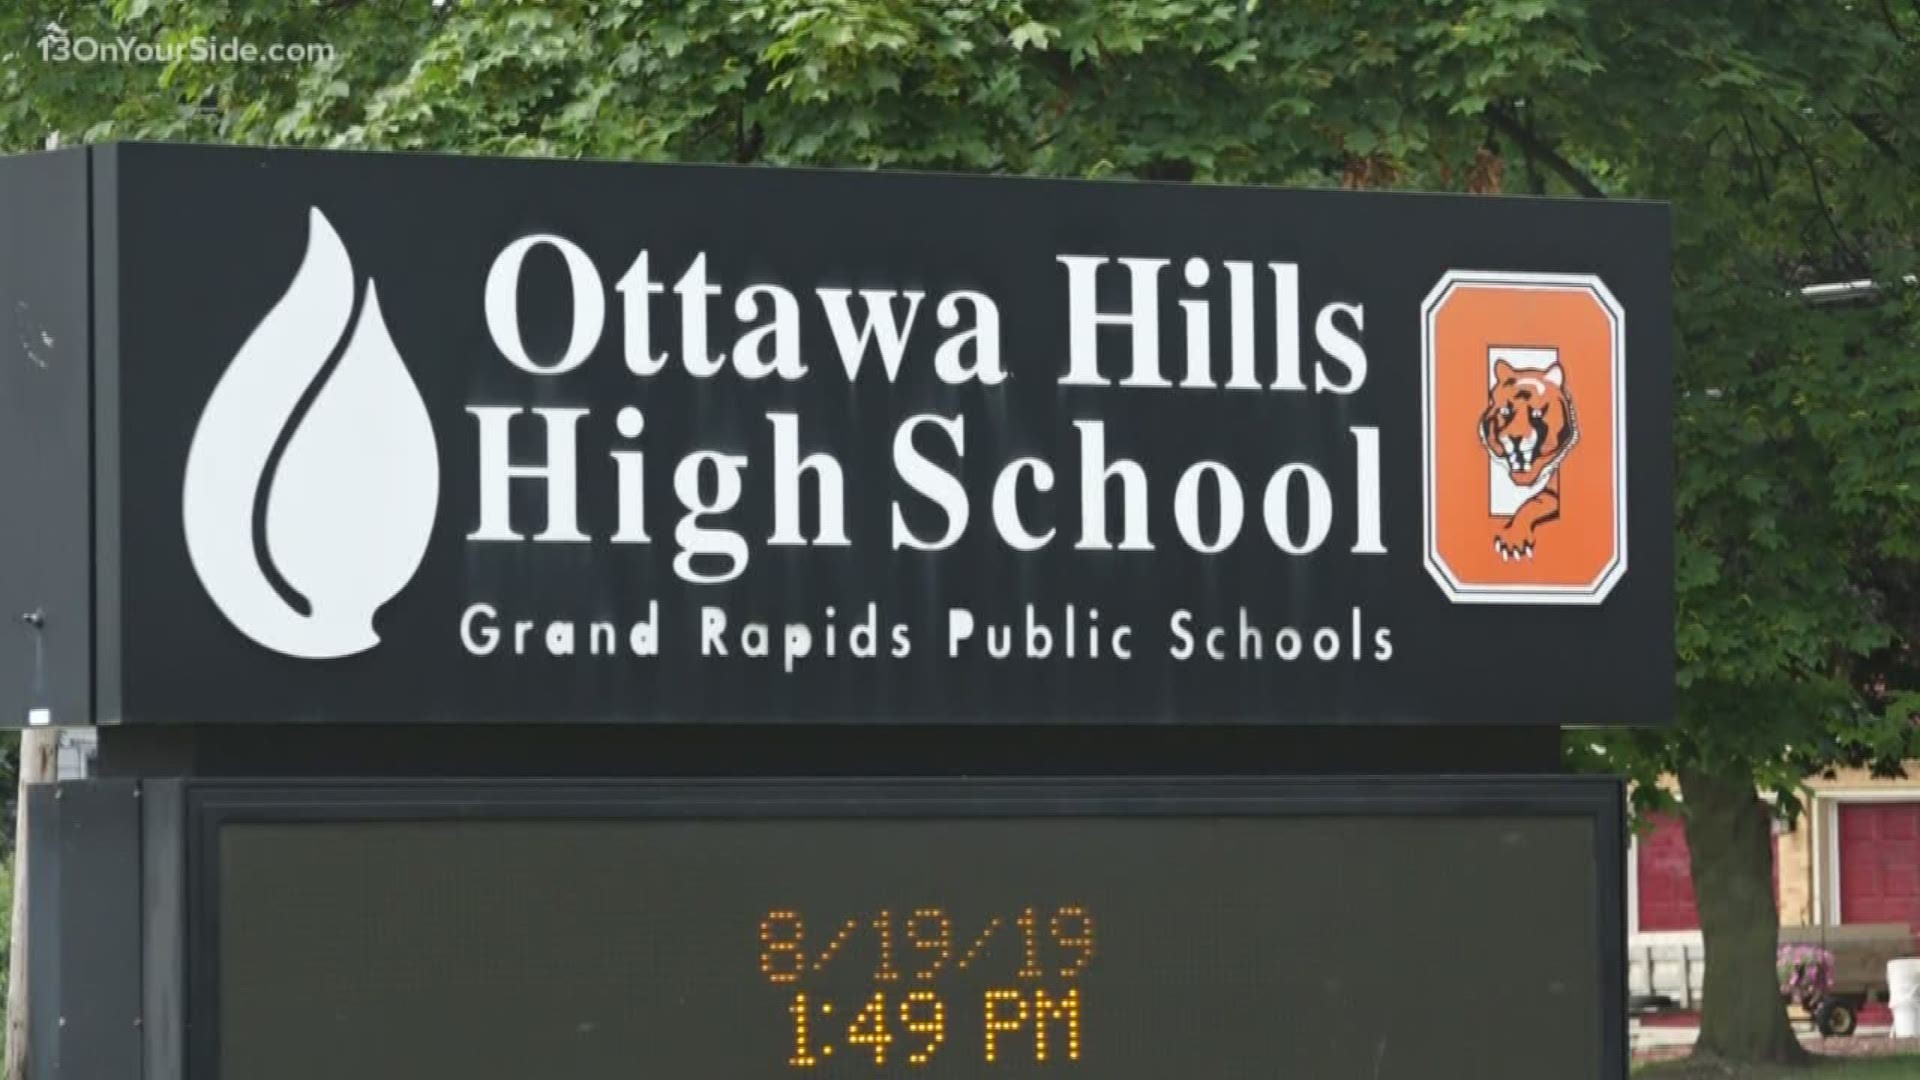 Grand Rapids Public Schools focuses on Ottawa Hills and Union High